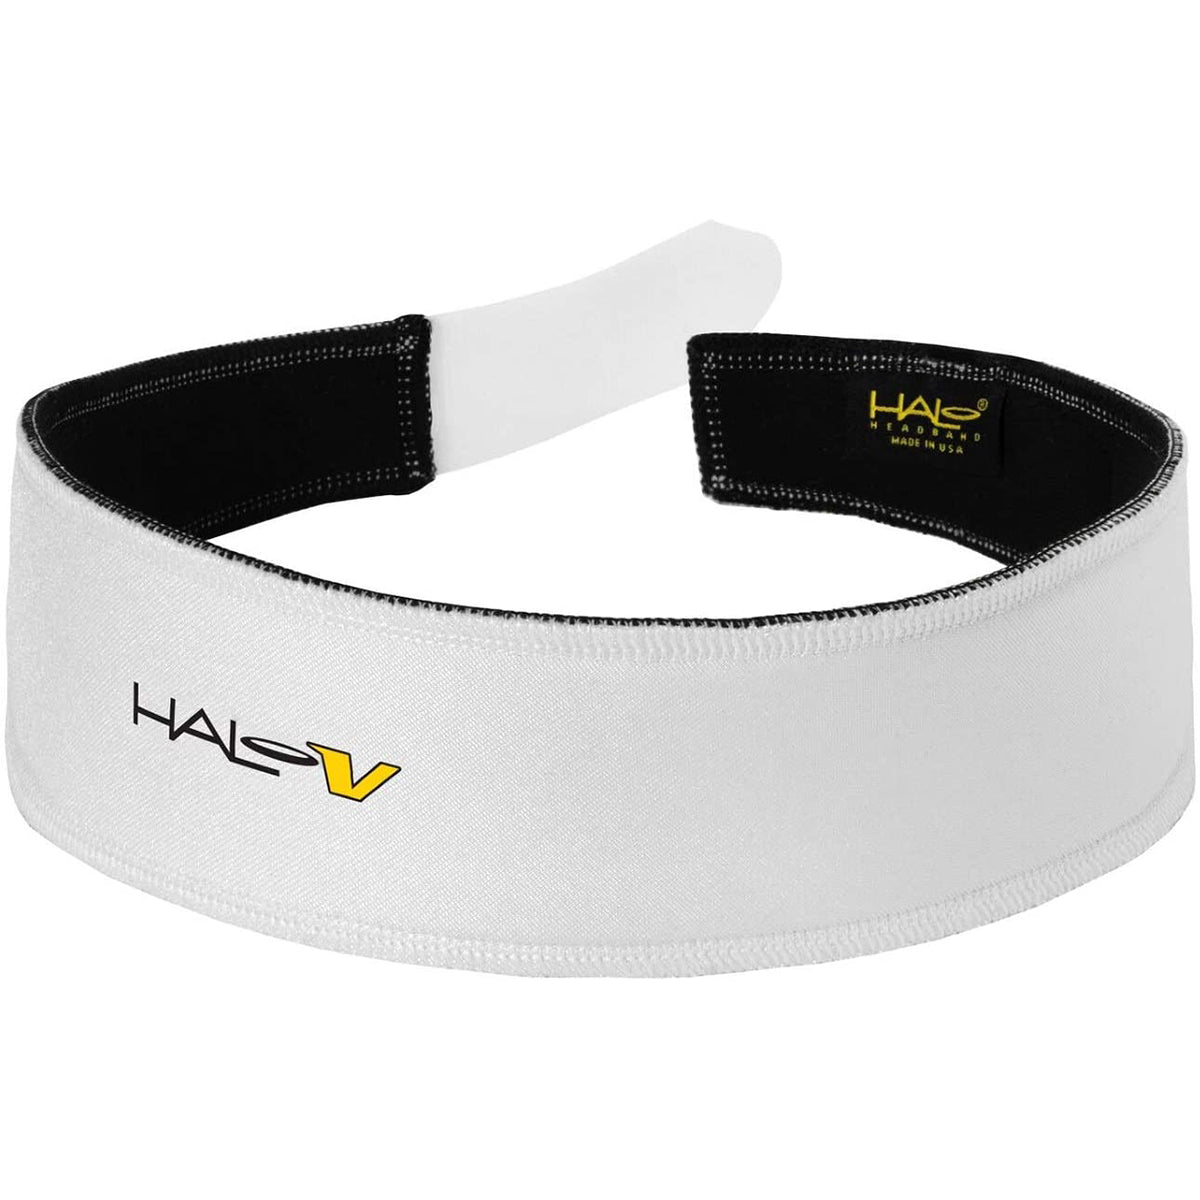 Halo Headband V Grip Hook and Loop Sweatband - White Halo